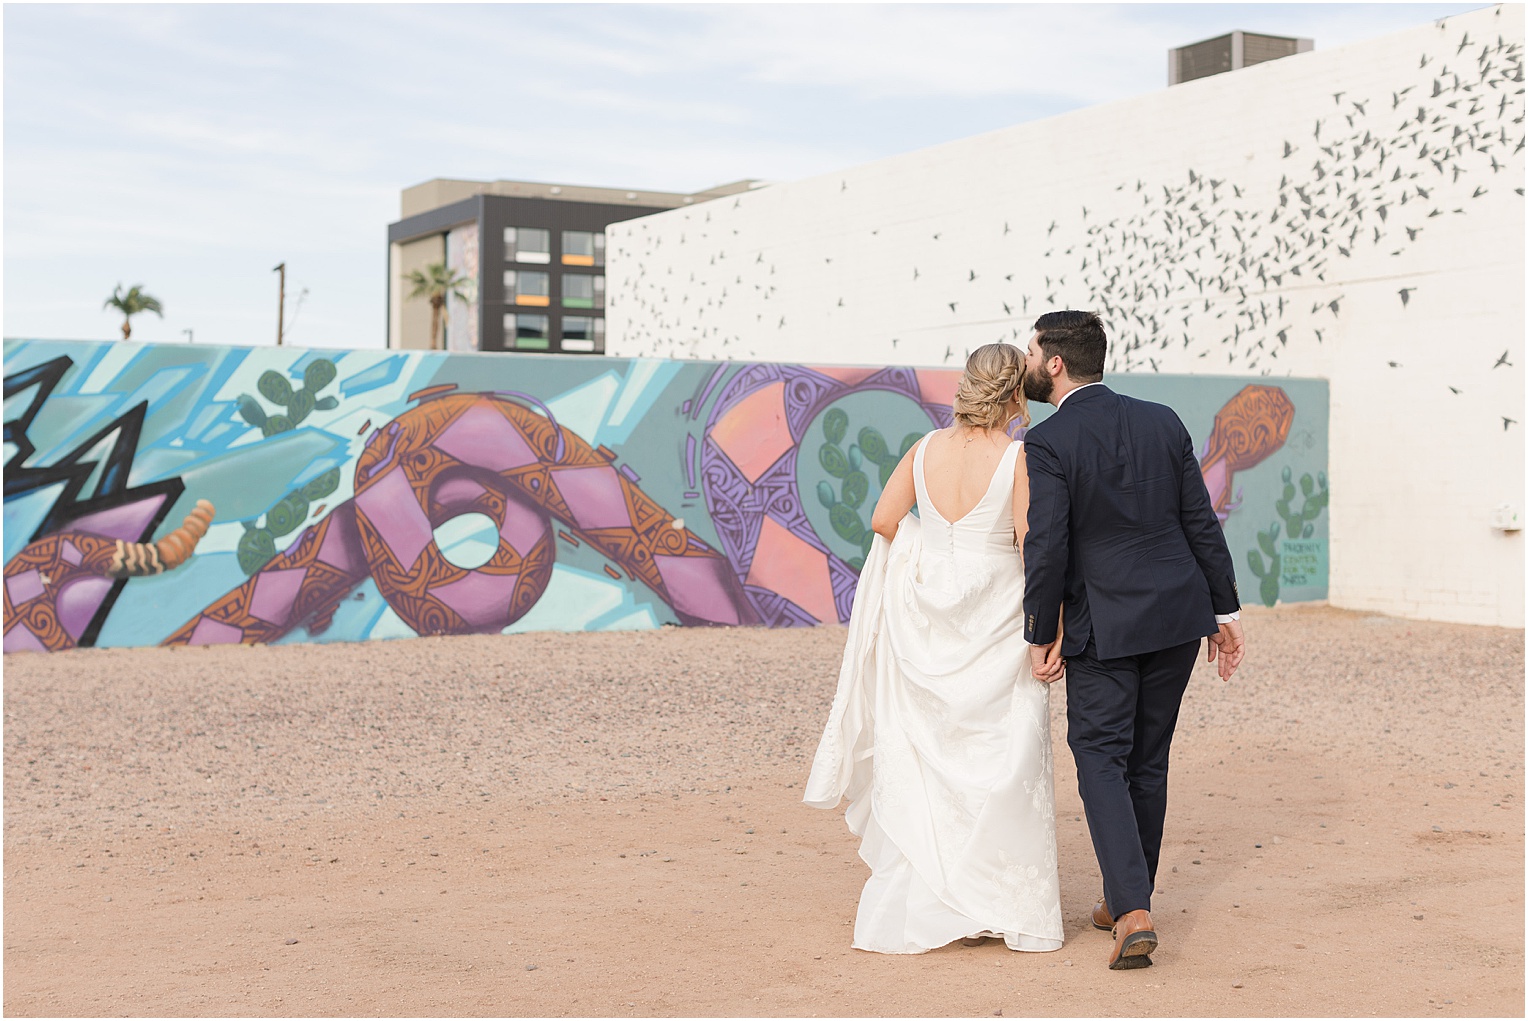 The Croft Downtown Wedding Phoenix, AZ Katie + Michael bride and groom portraits with mural